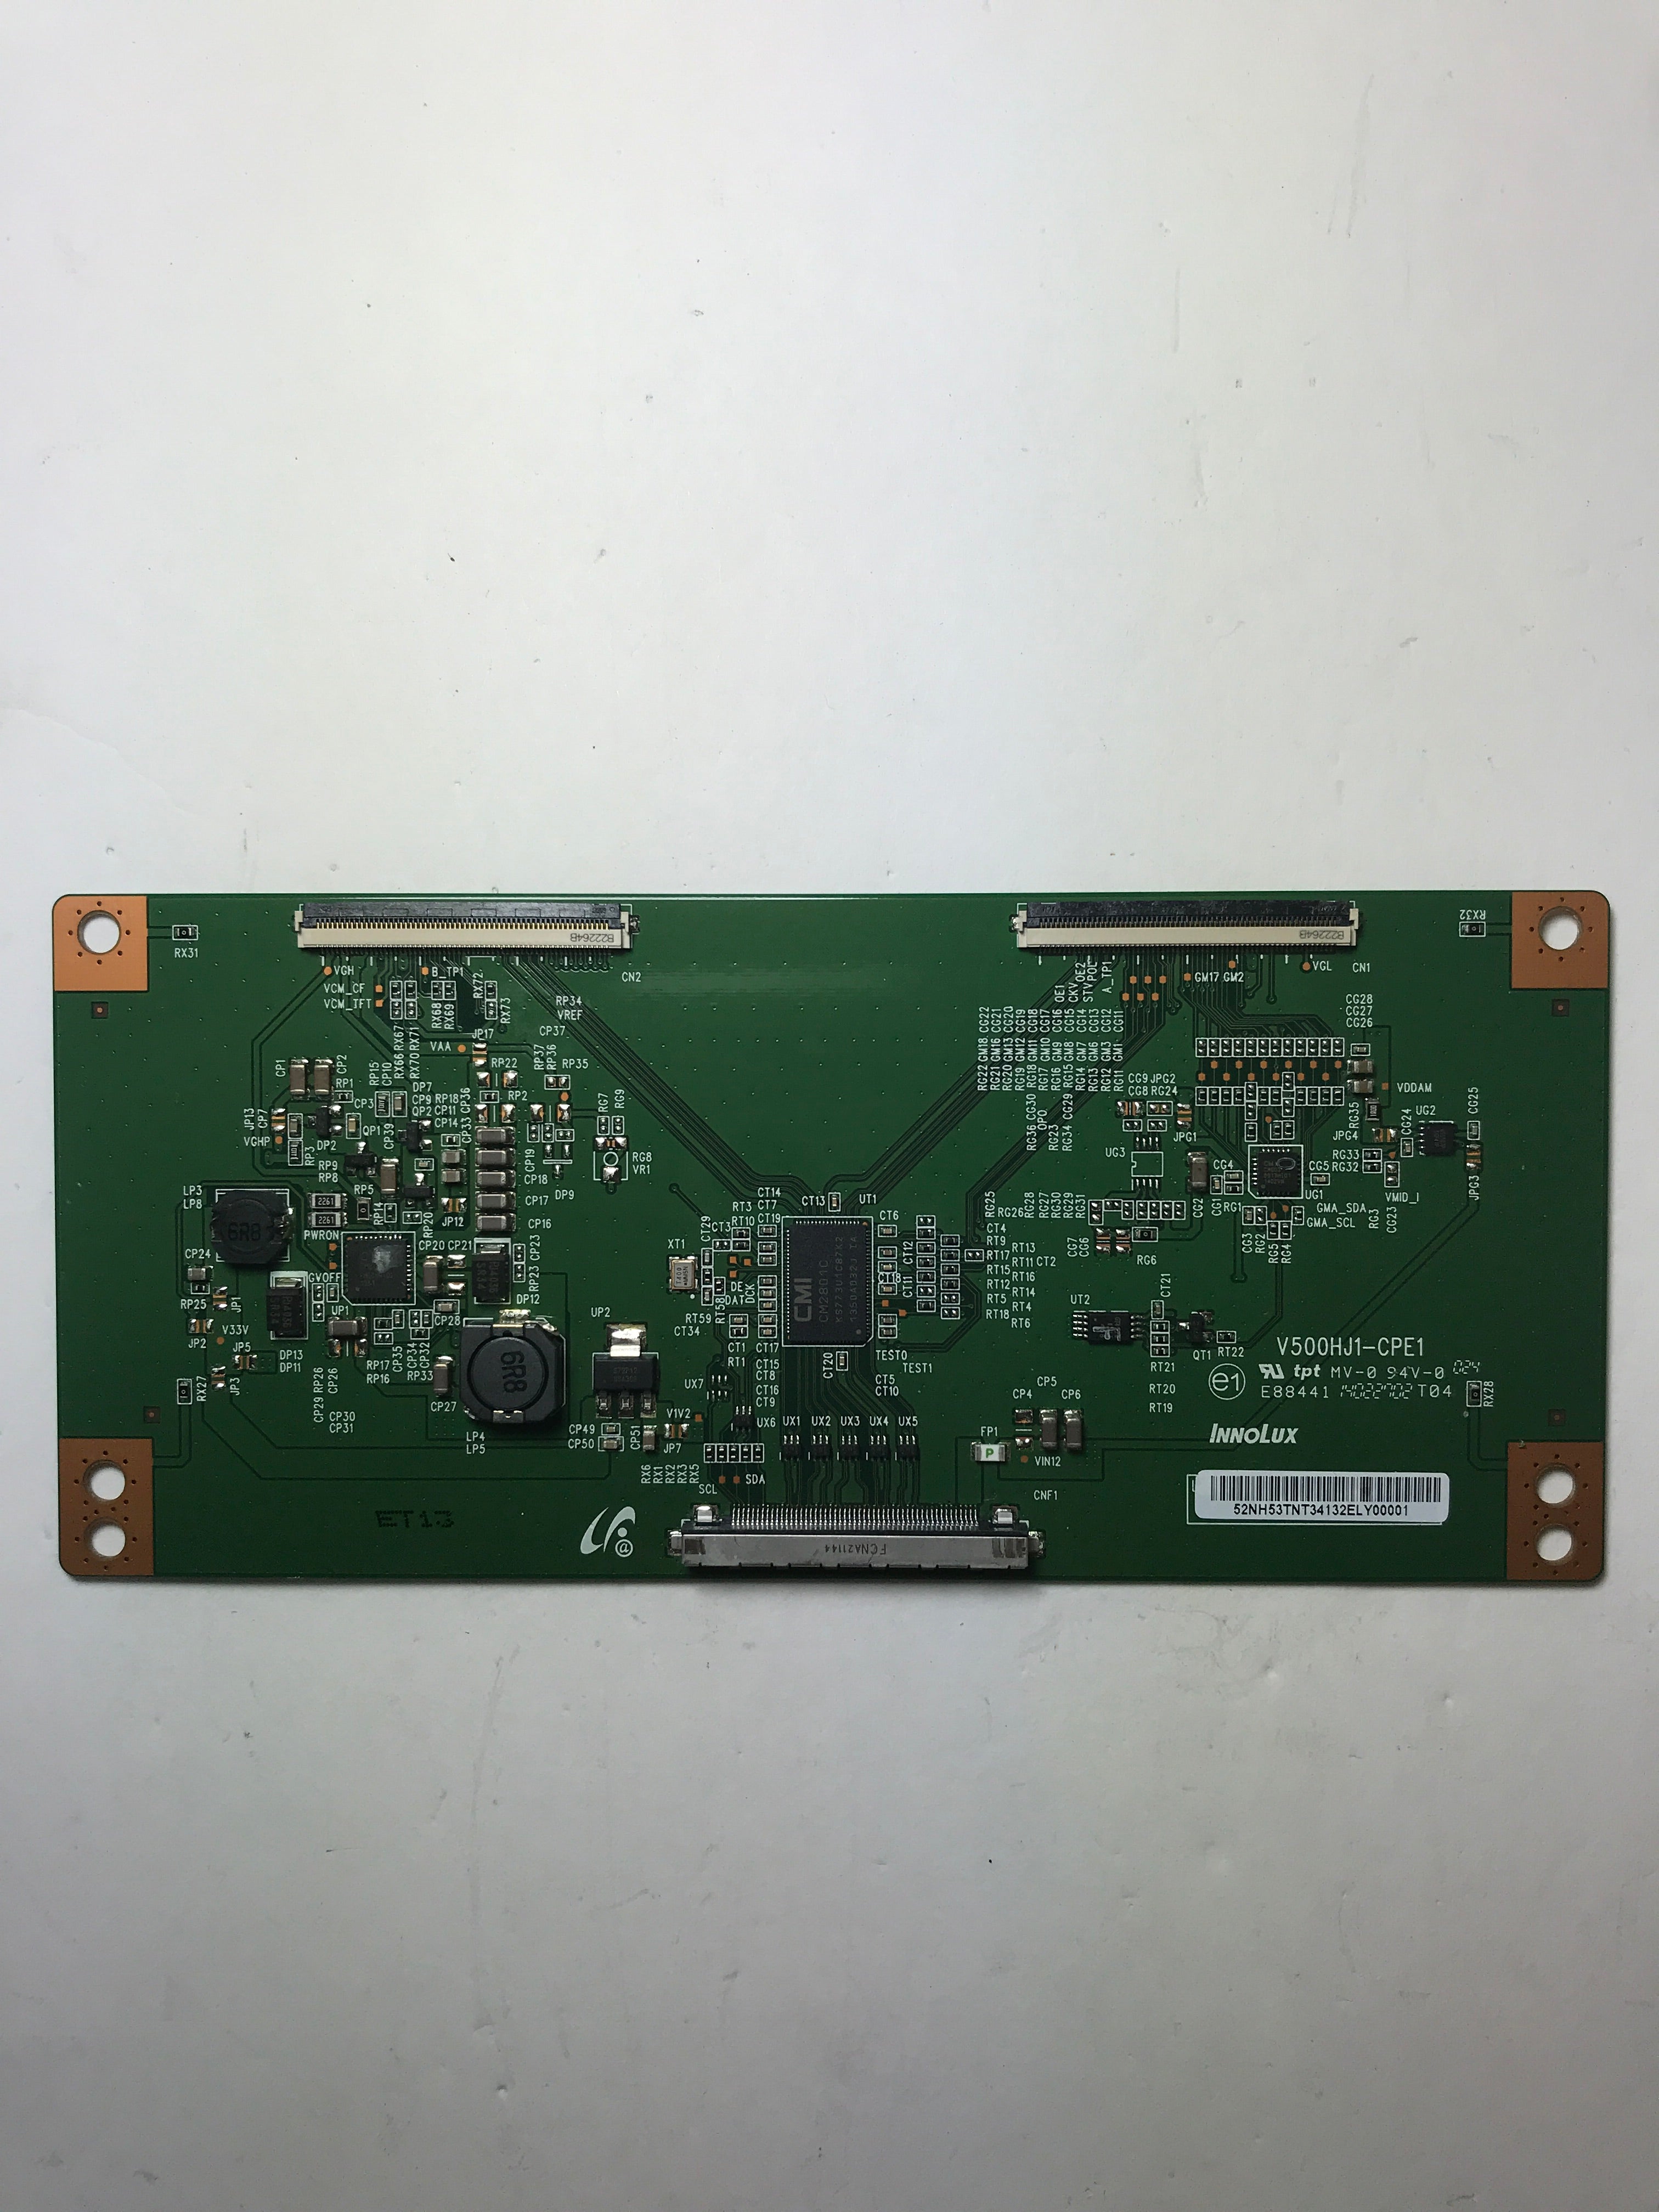 LG/NEC V500HJ1-CPE1 (EAT62054001) T-Con Board for 50LB6100-UG 50LB5900-UV E585